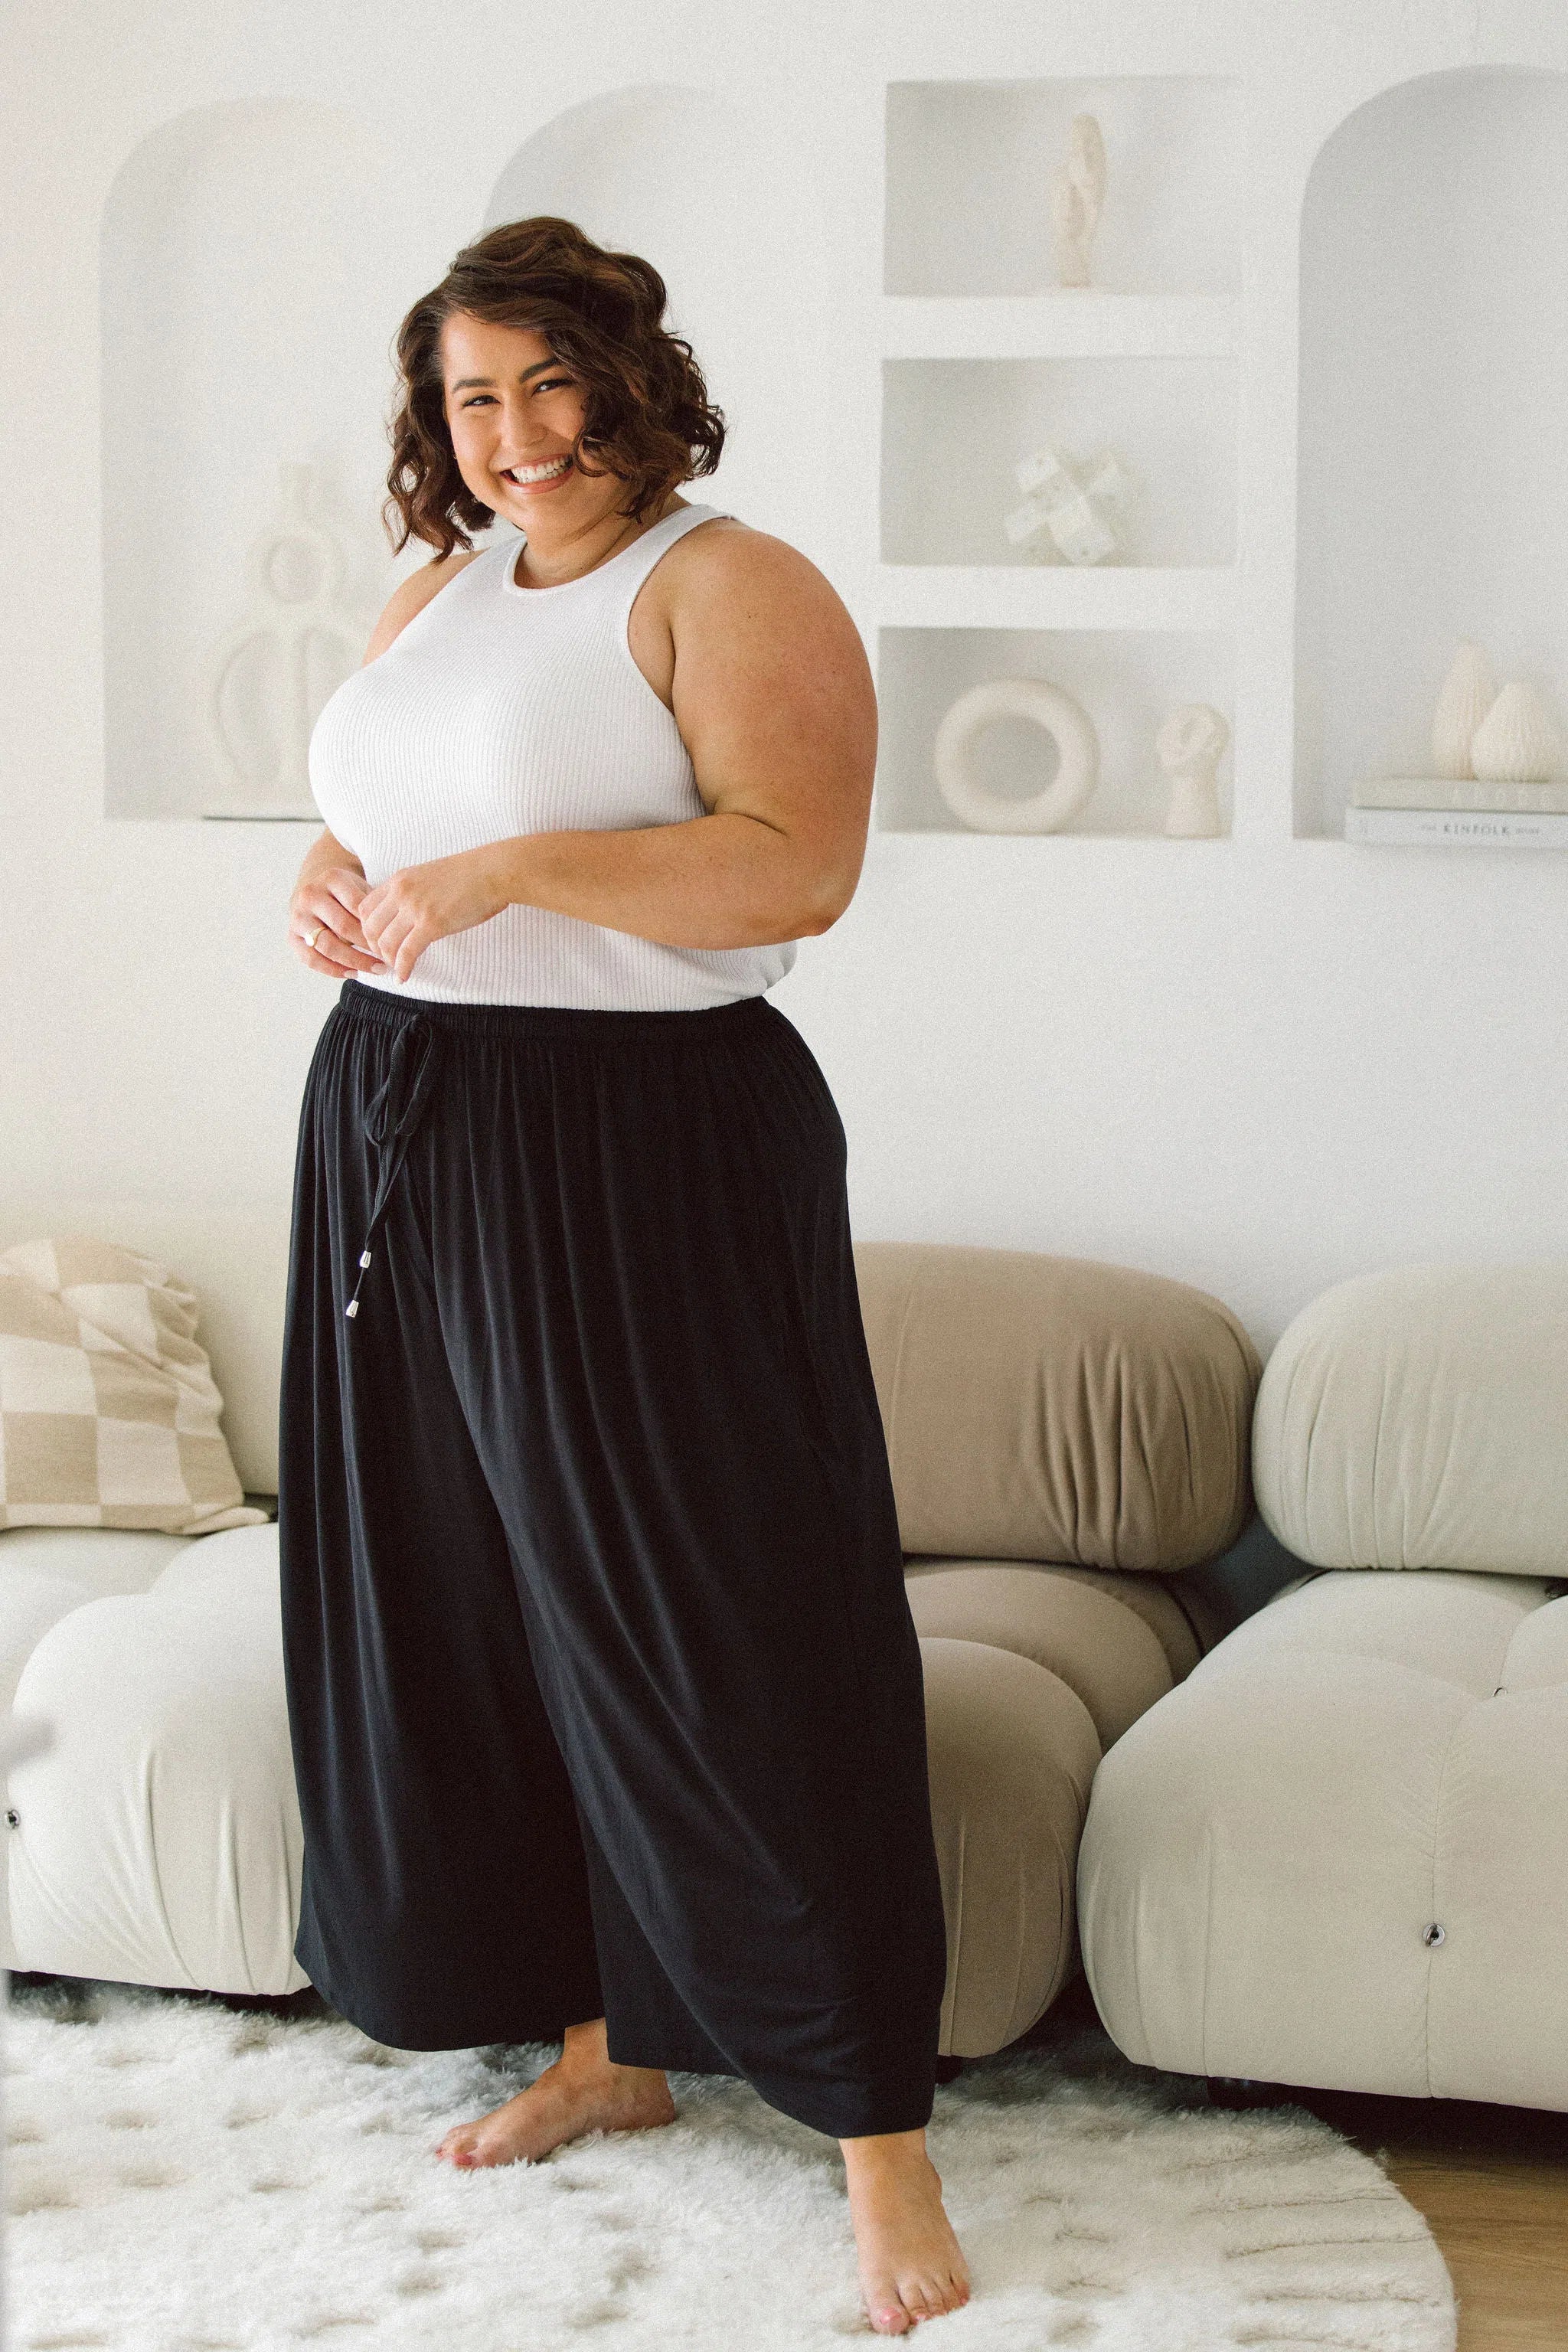 Stylish Black Plus Size Pants - Darcy Pants for Women